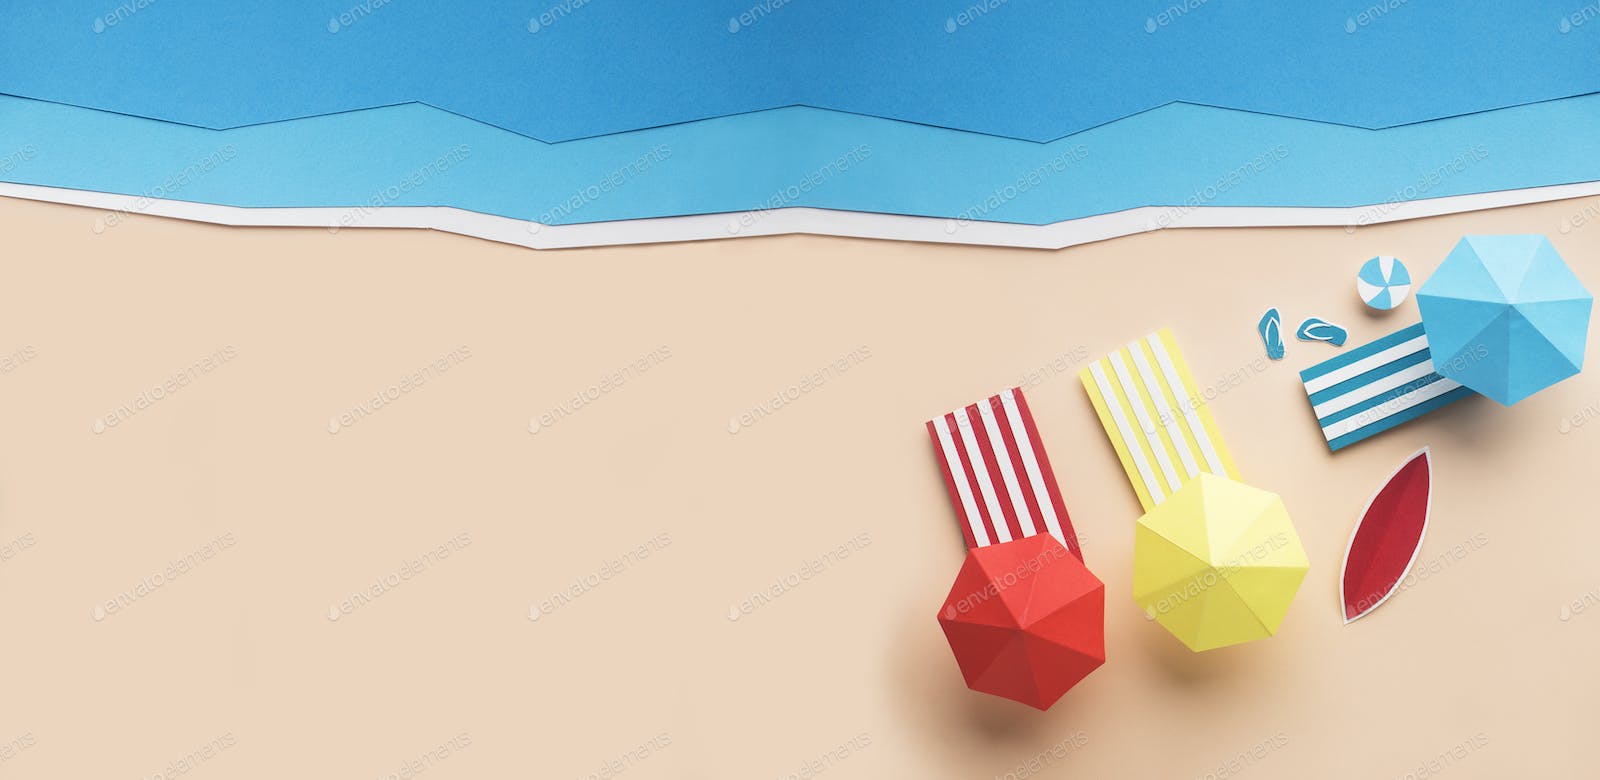 Summer Creative Wallpaper With Sandy Beach, Sea And Umbrellas Photo By Prostock Studio On Envato Elements